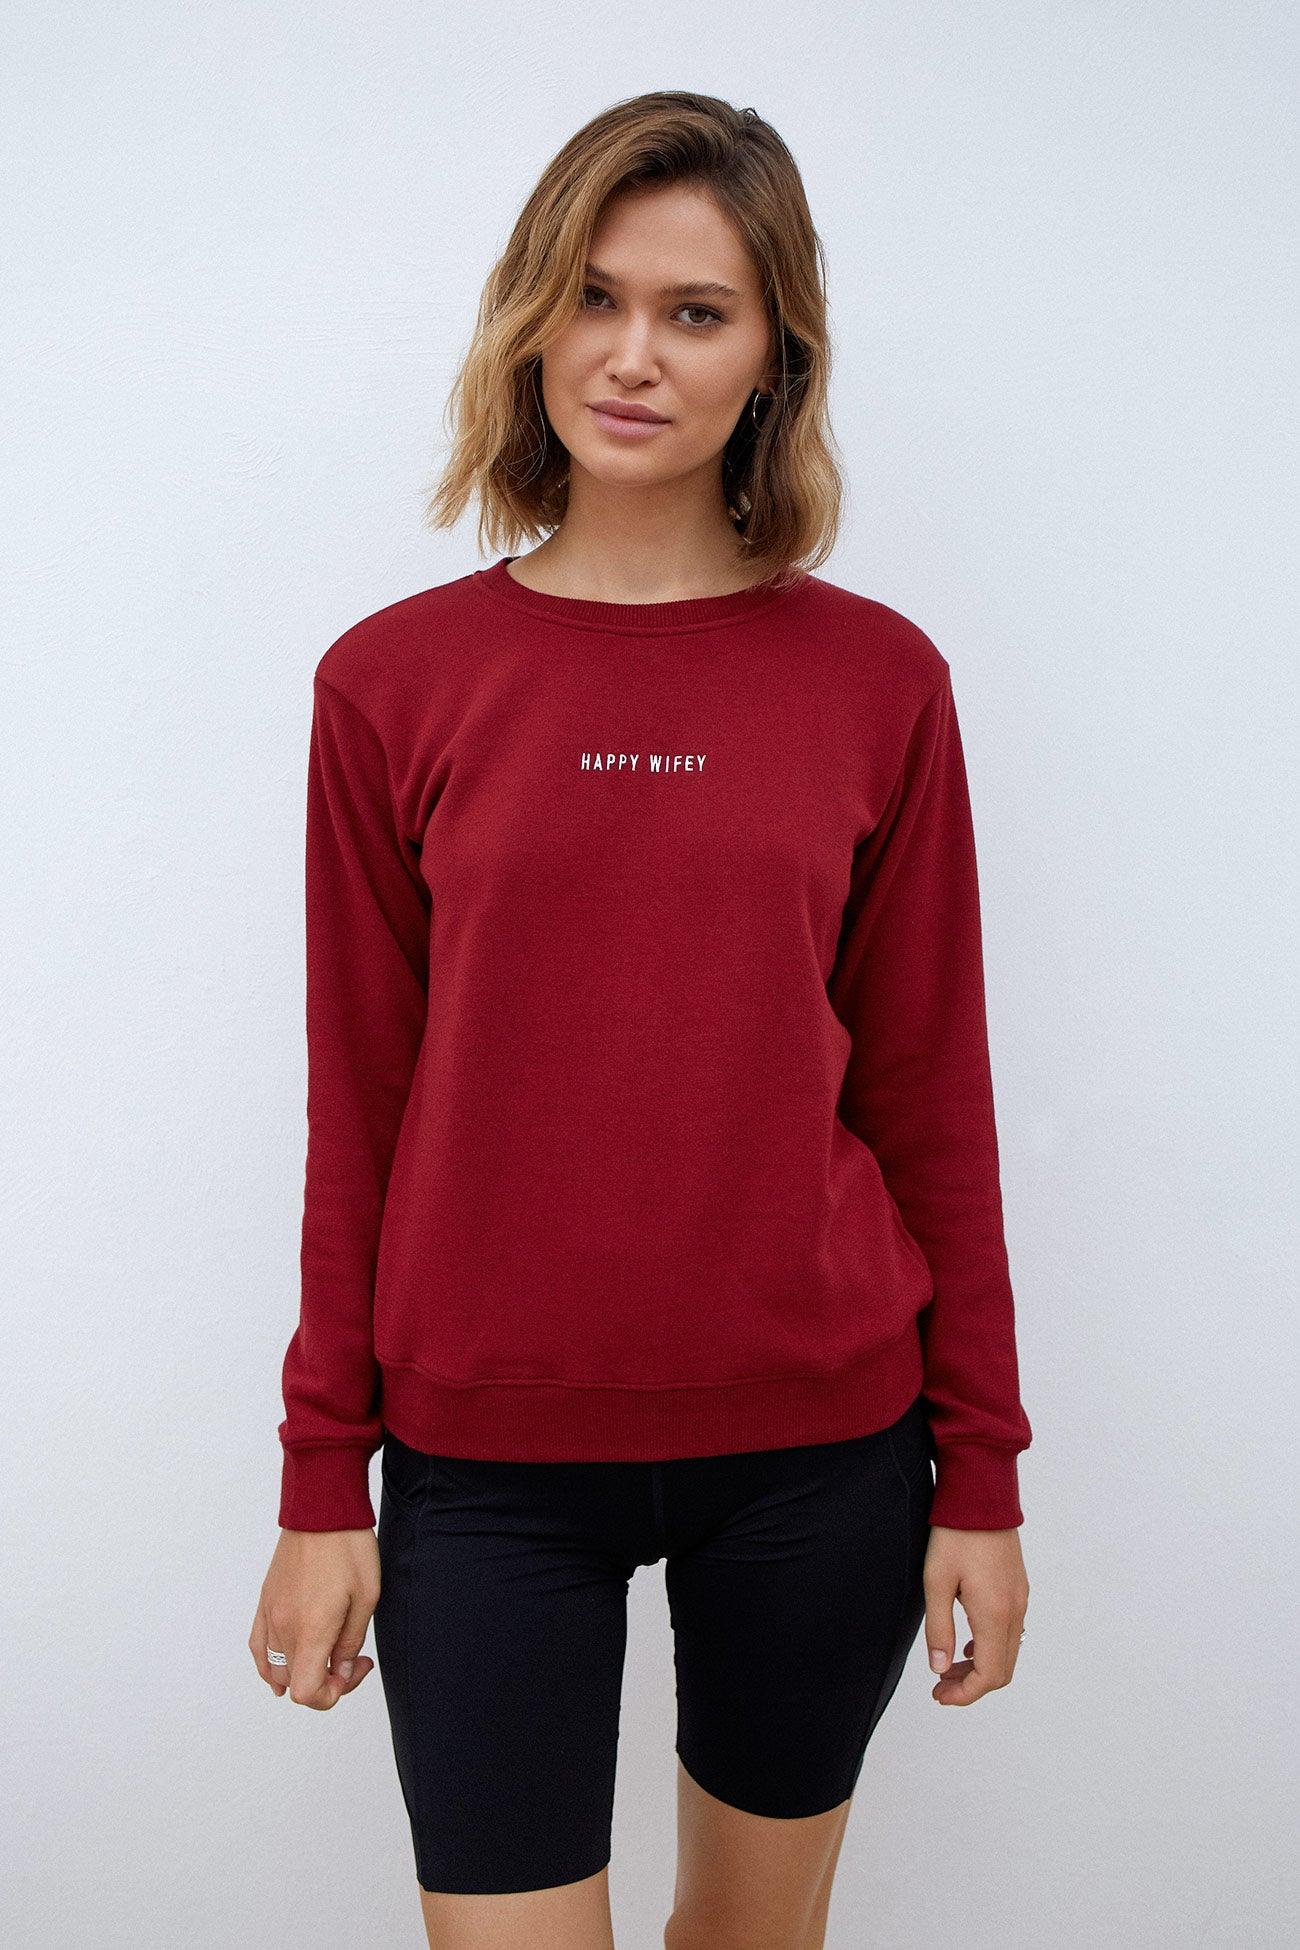 Sweatshirt Lipstick Red - Happy Wifey